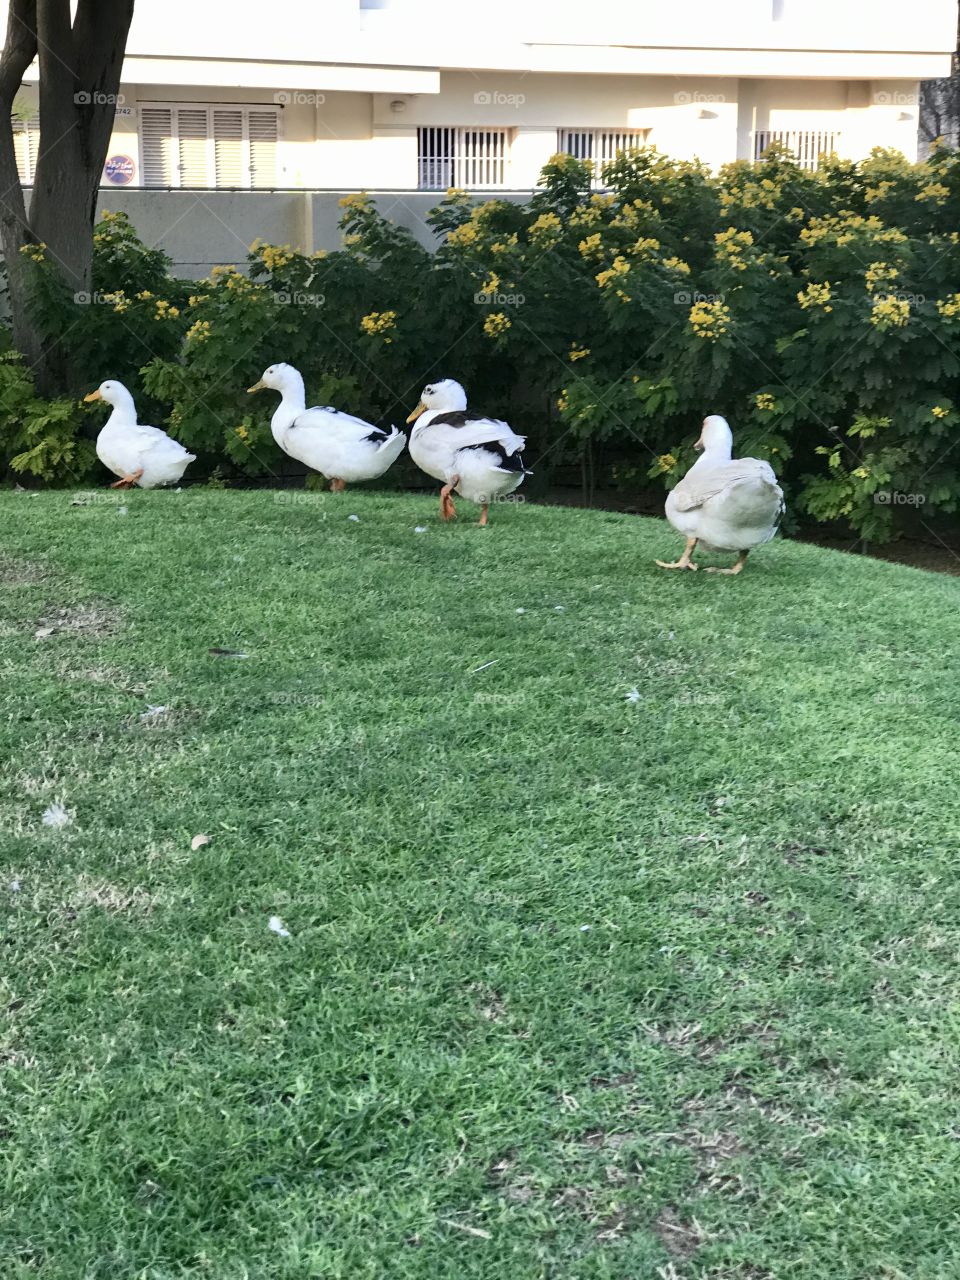 Ducks walking in a row funnily.